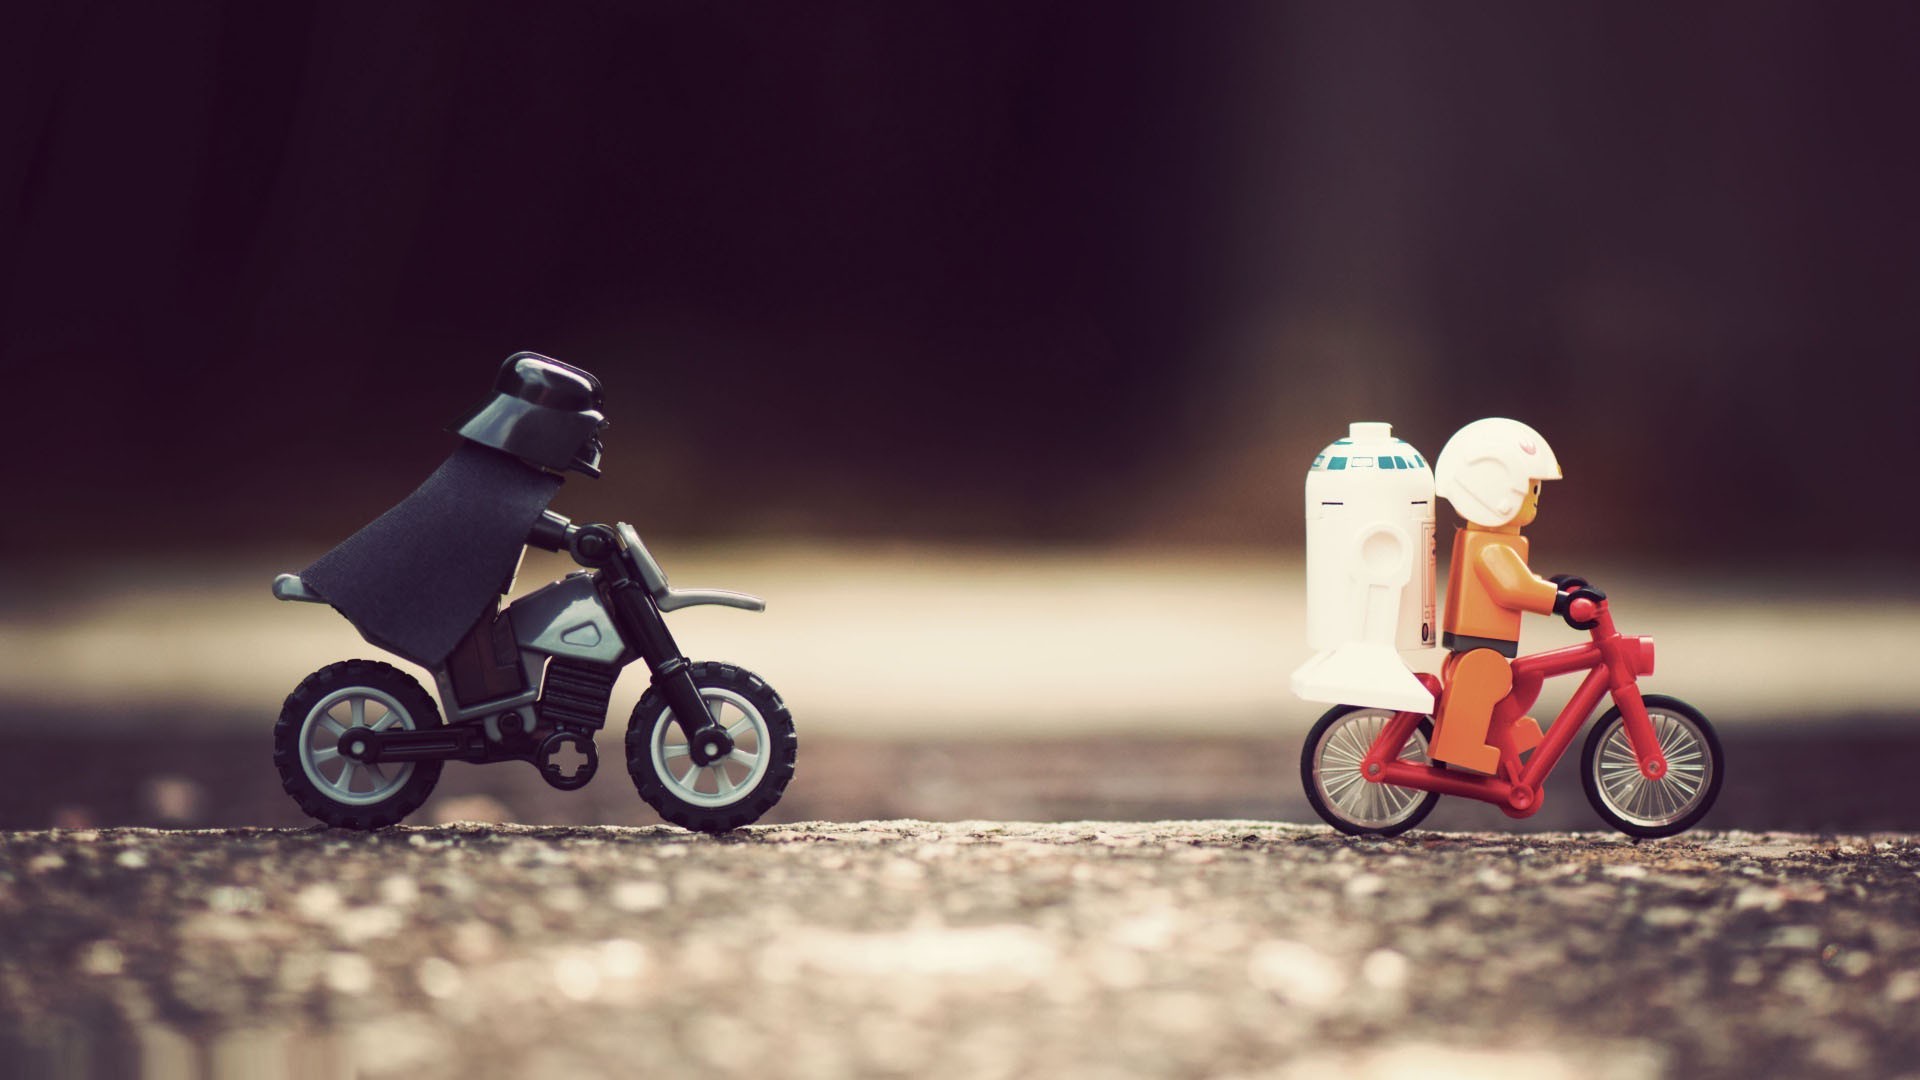 Darth Vader Chasing Luke And R2 D2 On Bikes Wallpaper